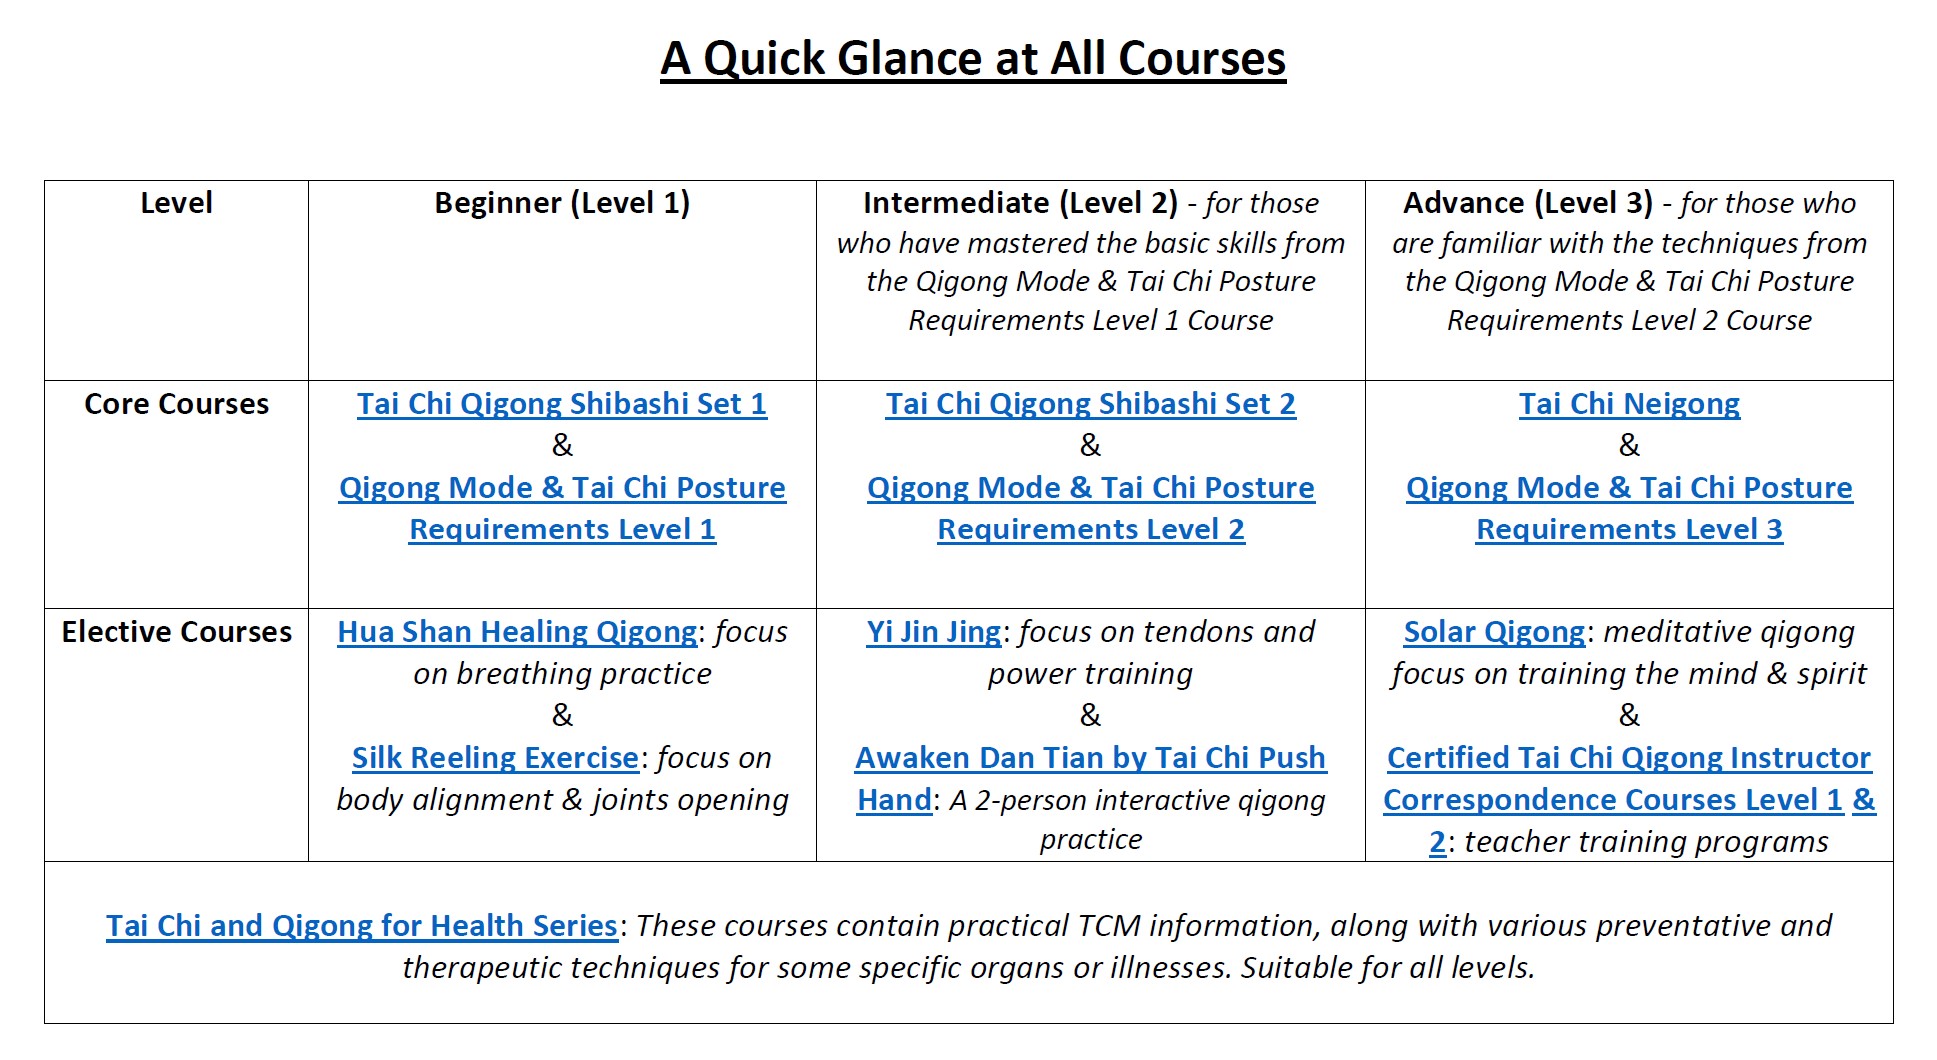 all courses summary